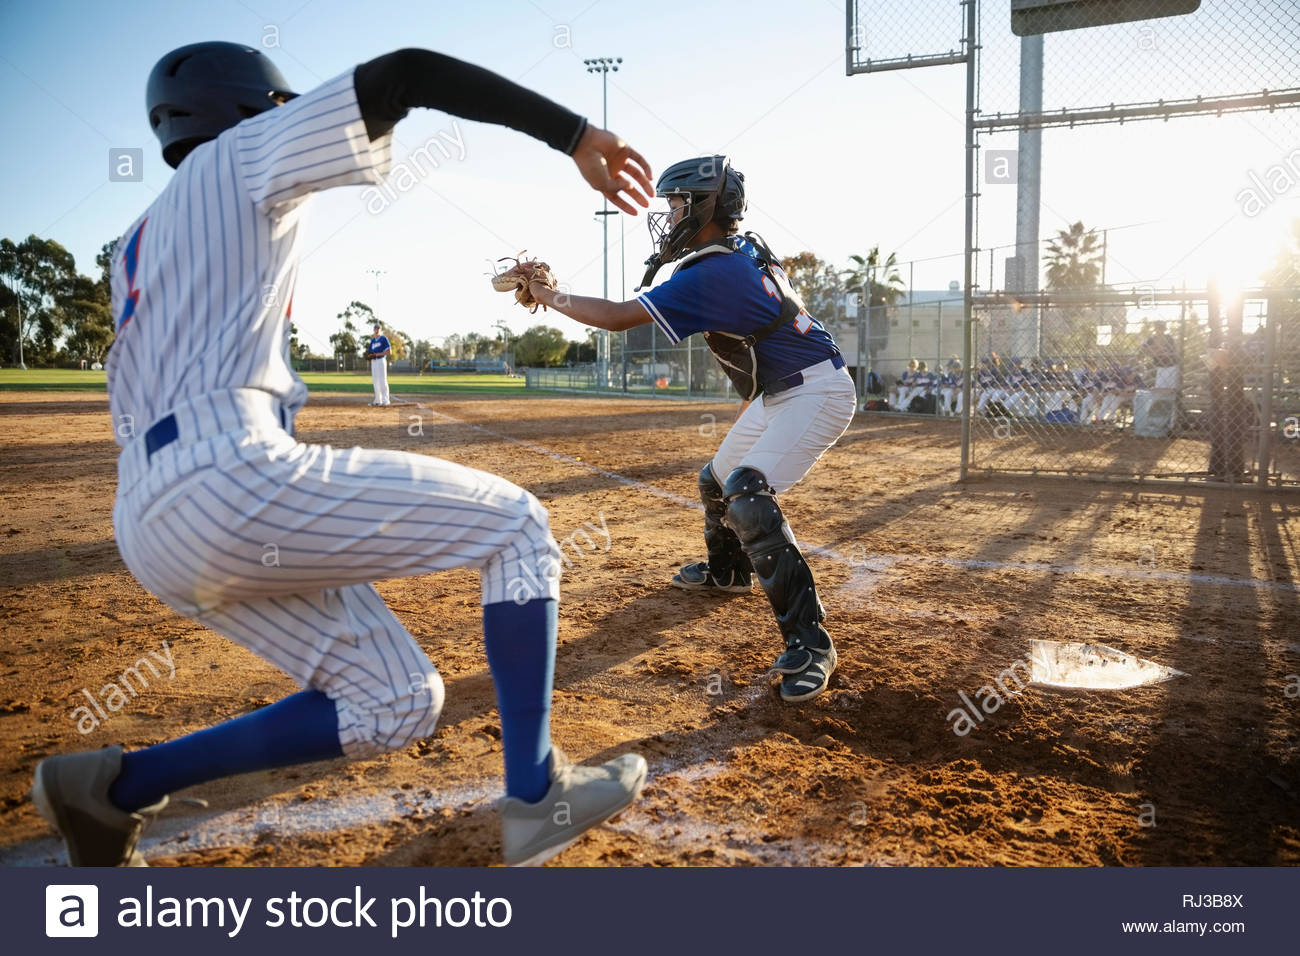 Baseball player sliding into home plate Stock Photo